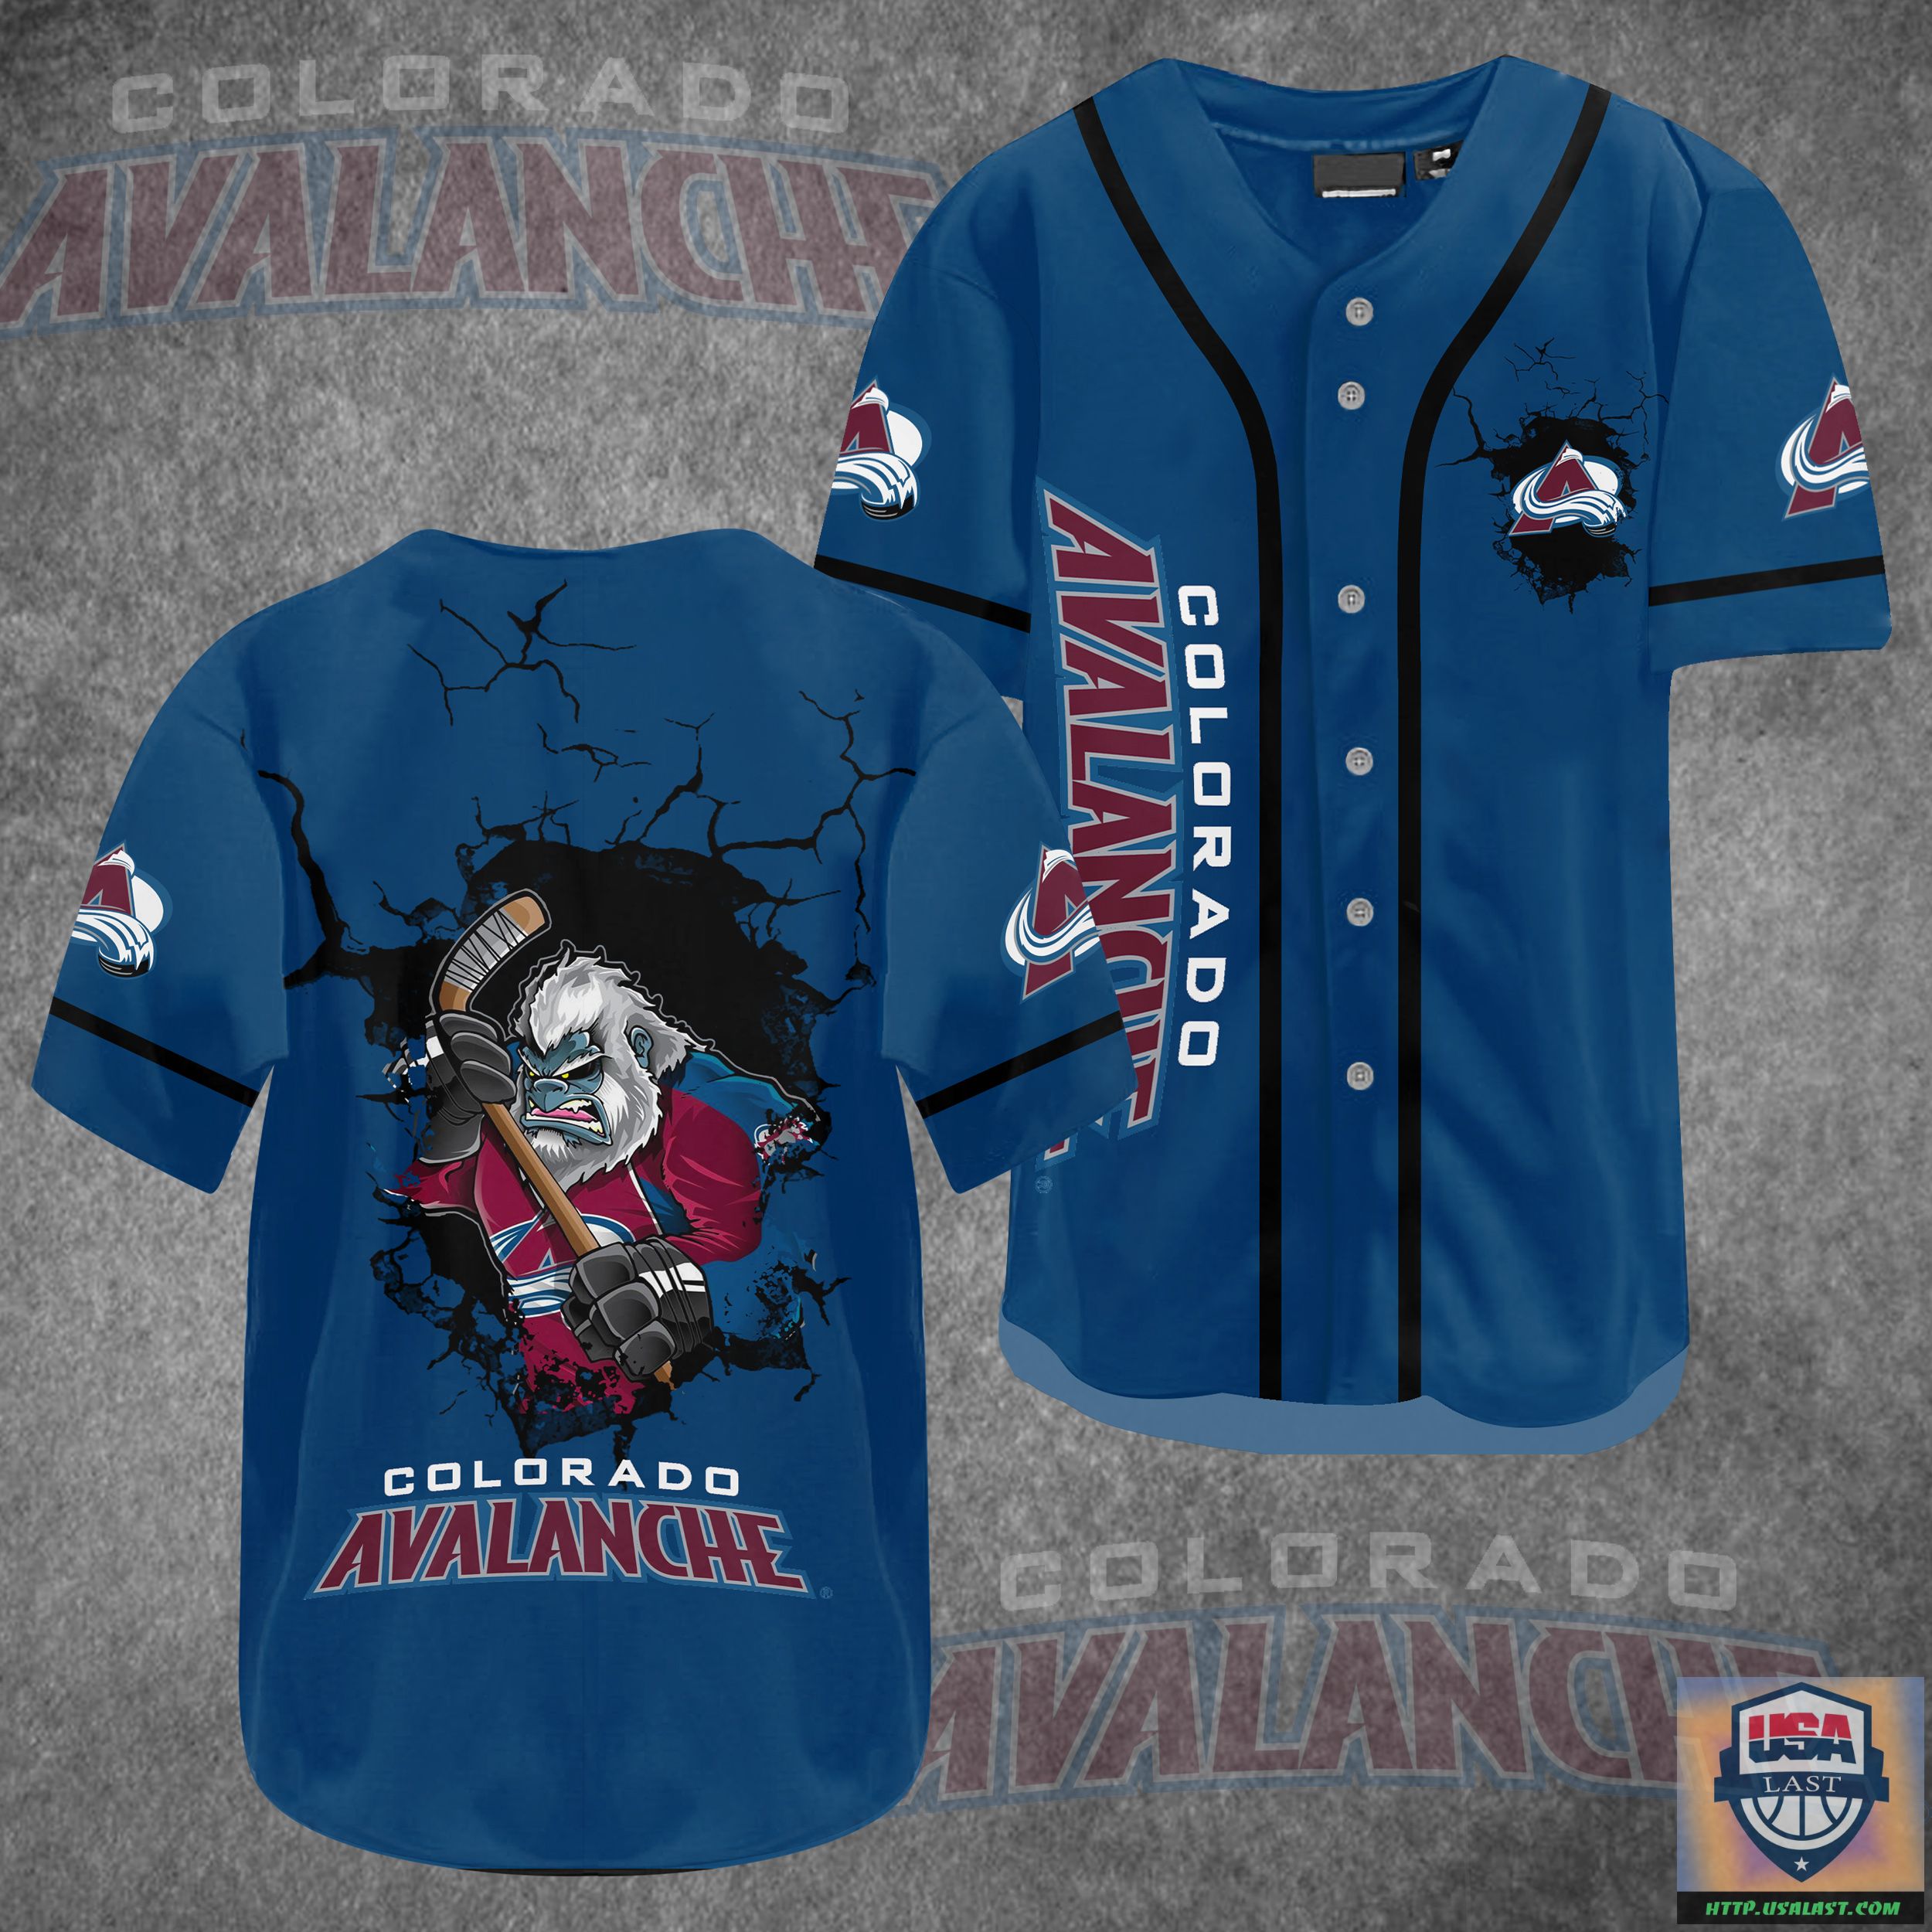 Colorado Avalanche Break Wall Baseball Jersey Shirt – Usalast